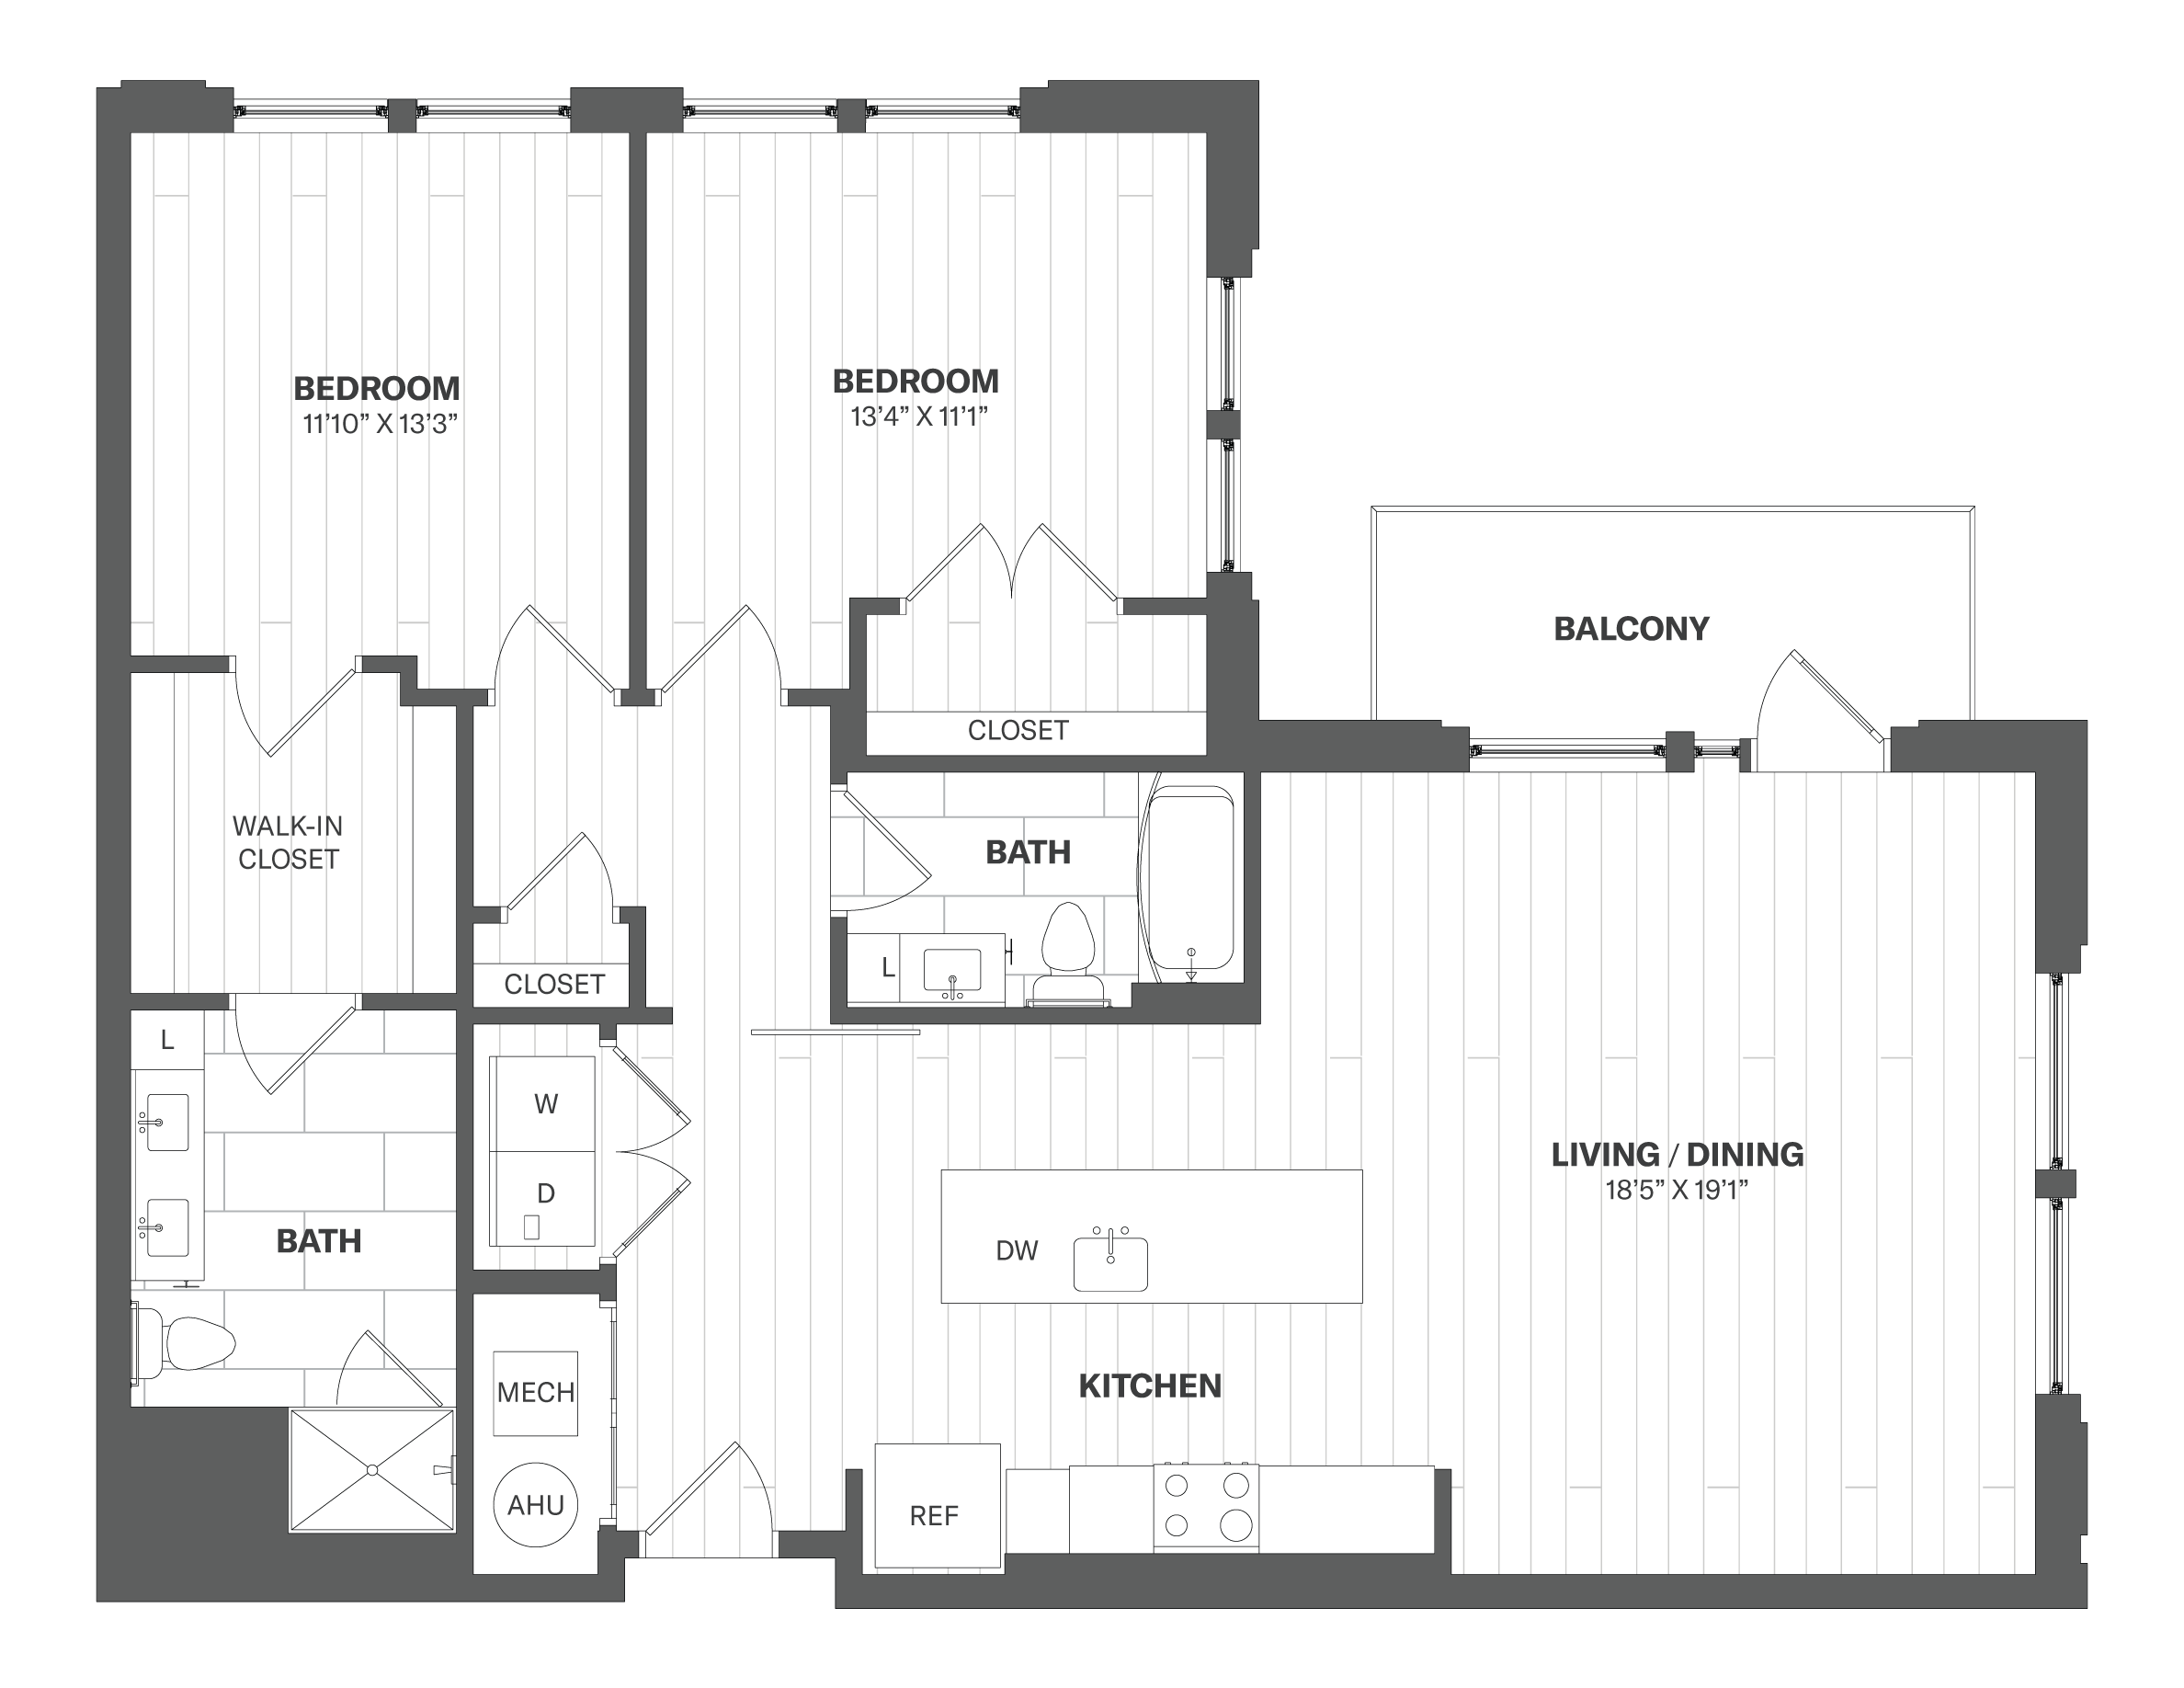 Apartment 448 floorplan